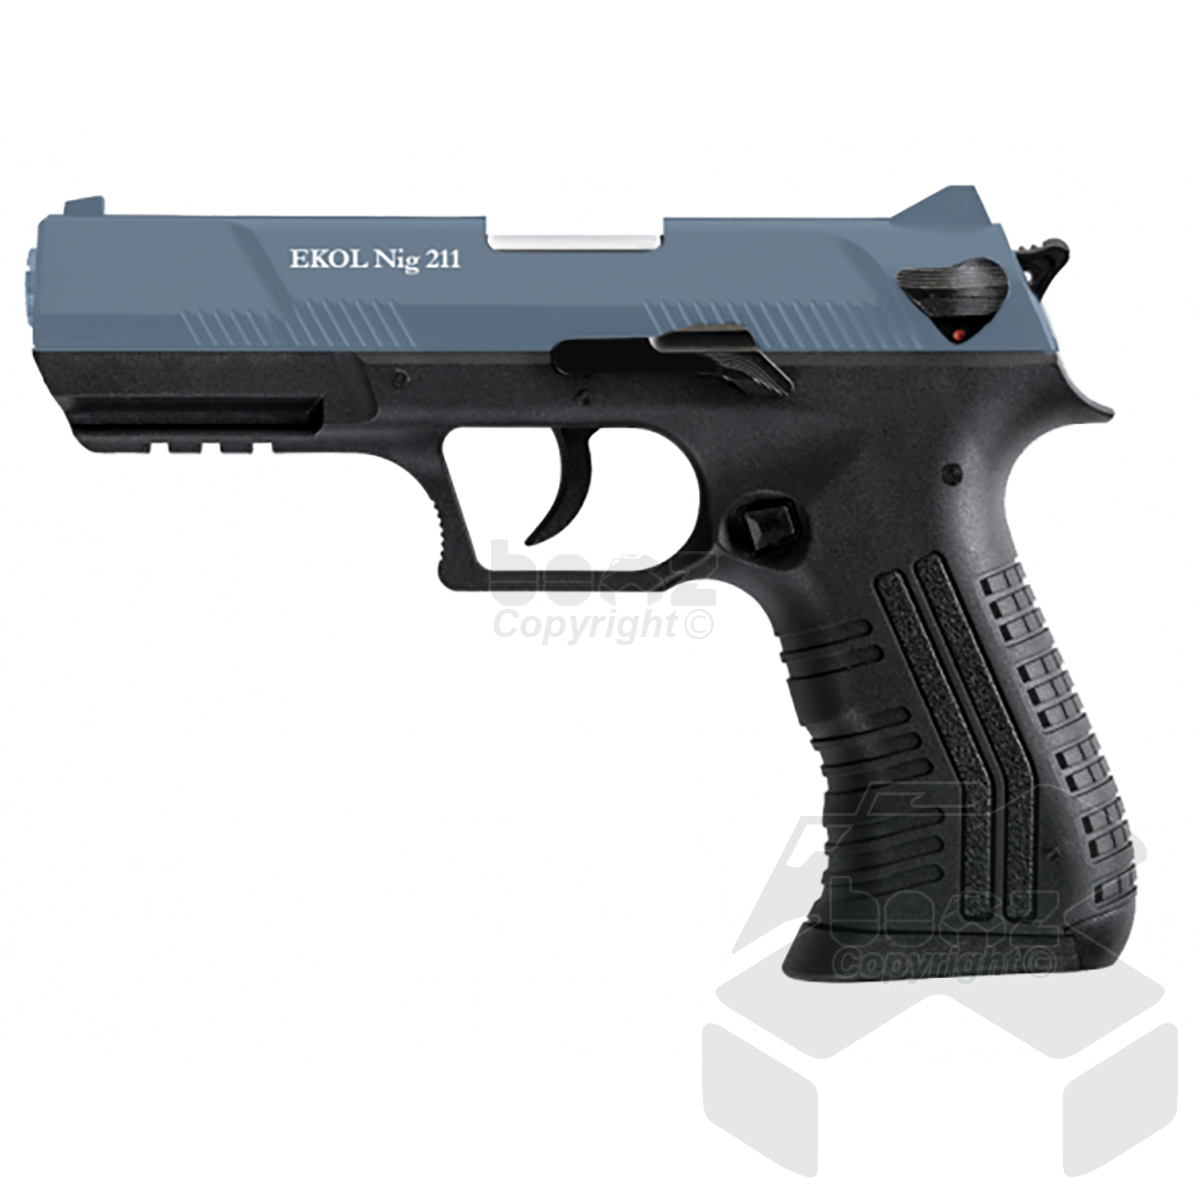 Ekol Nig 211 Blank Firing Pistol - 9mm